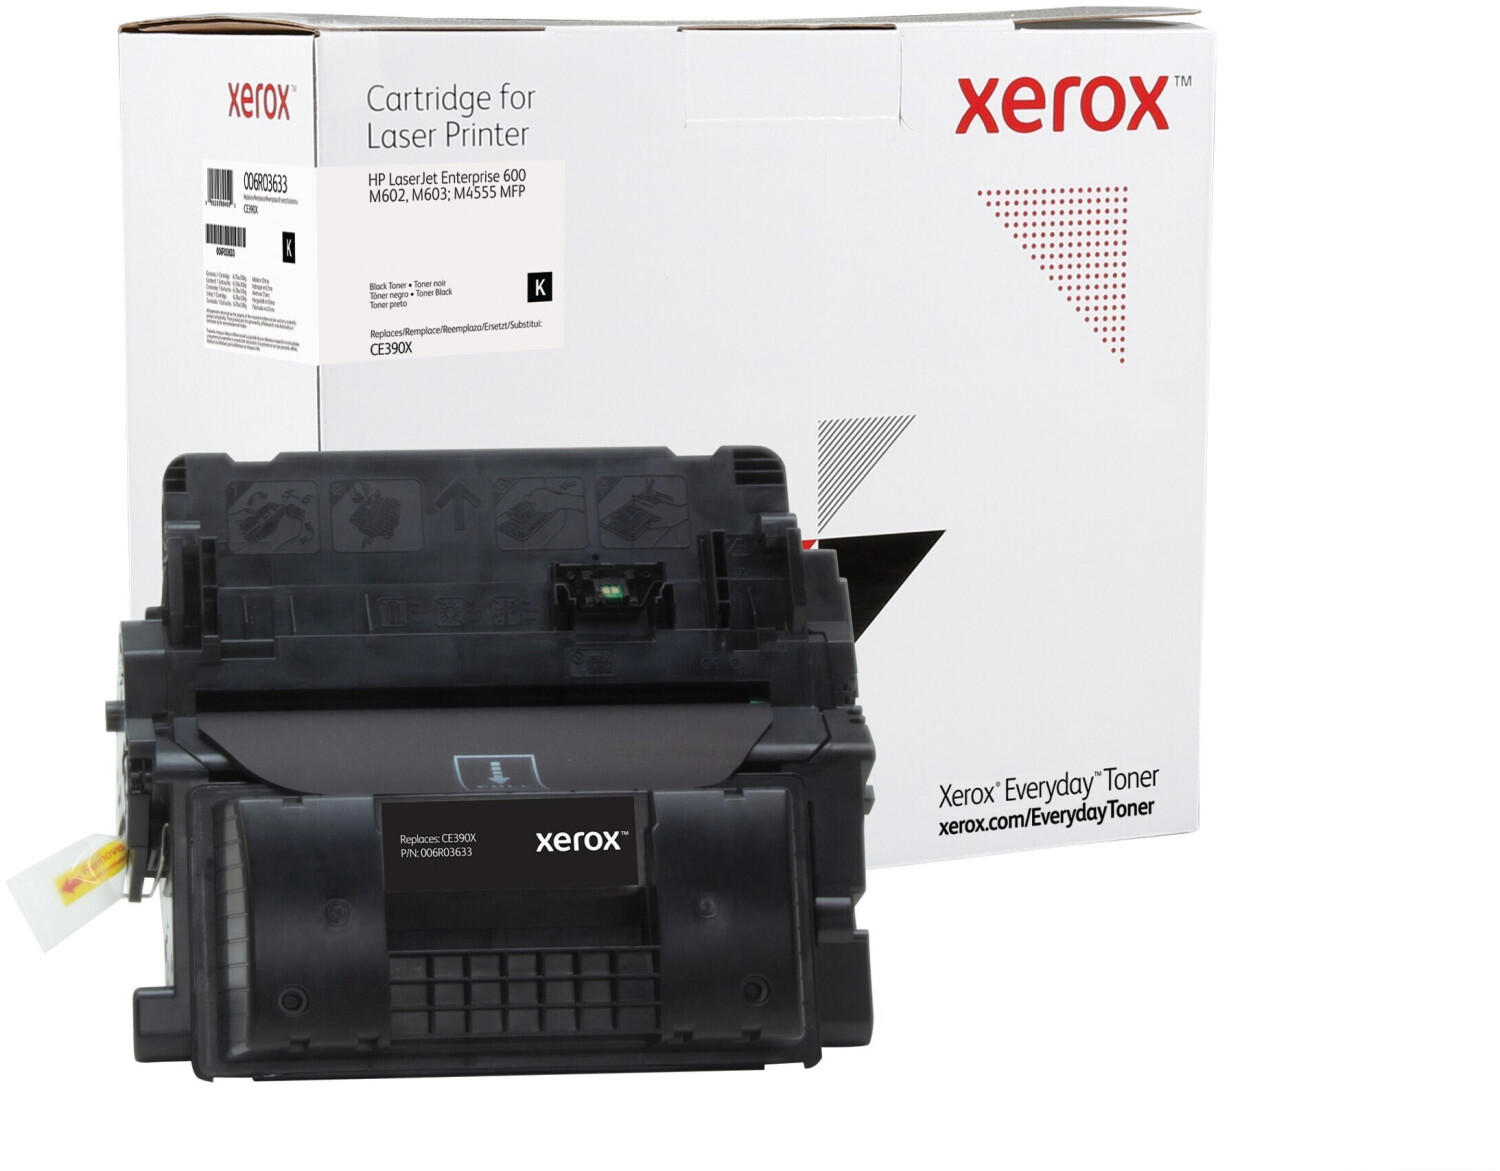 Xerox Toner for HP CE390X